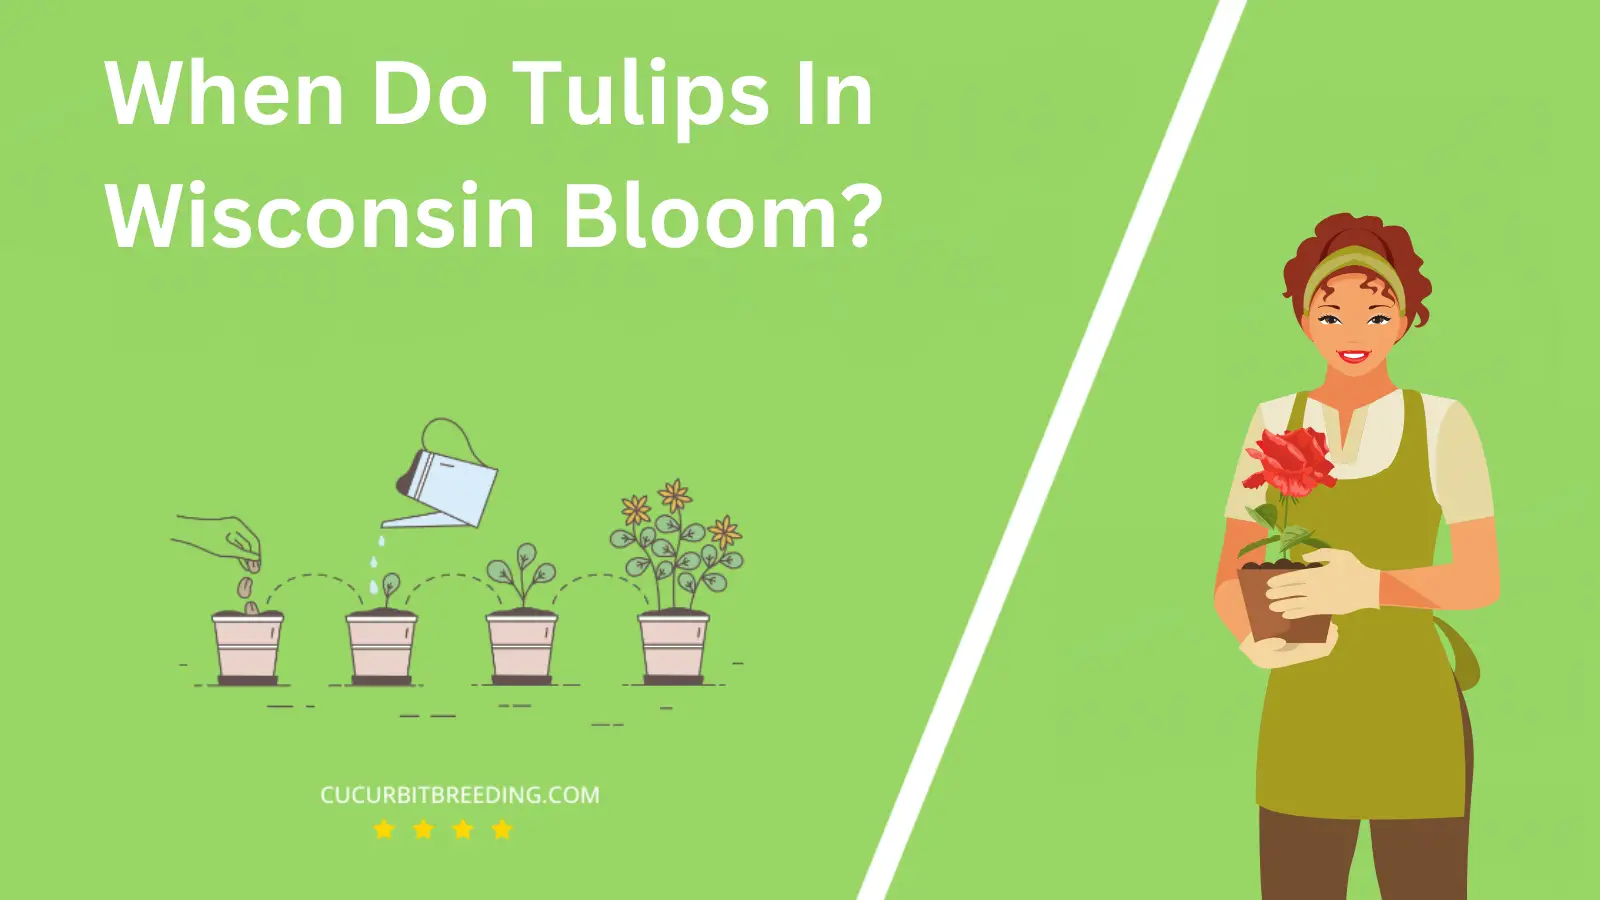 When Do Tulips In Wisconsin Bloom?